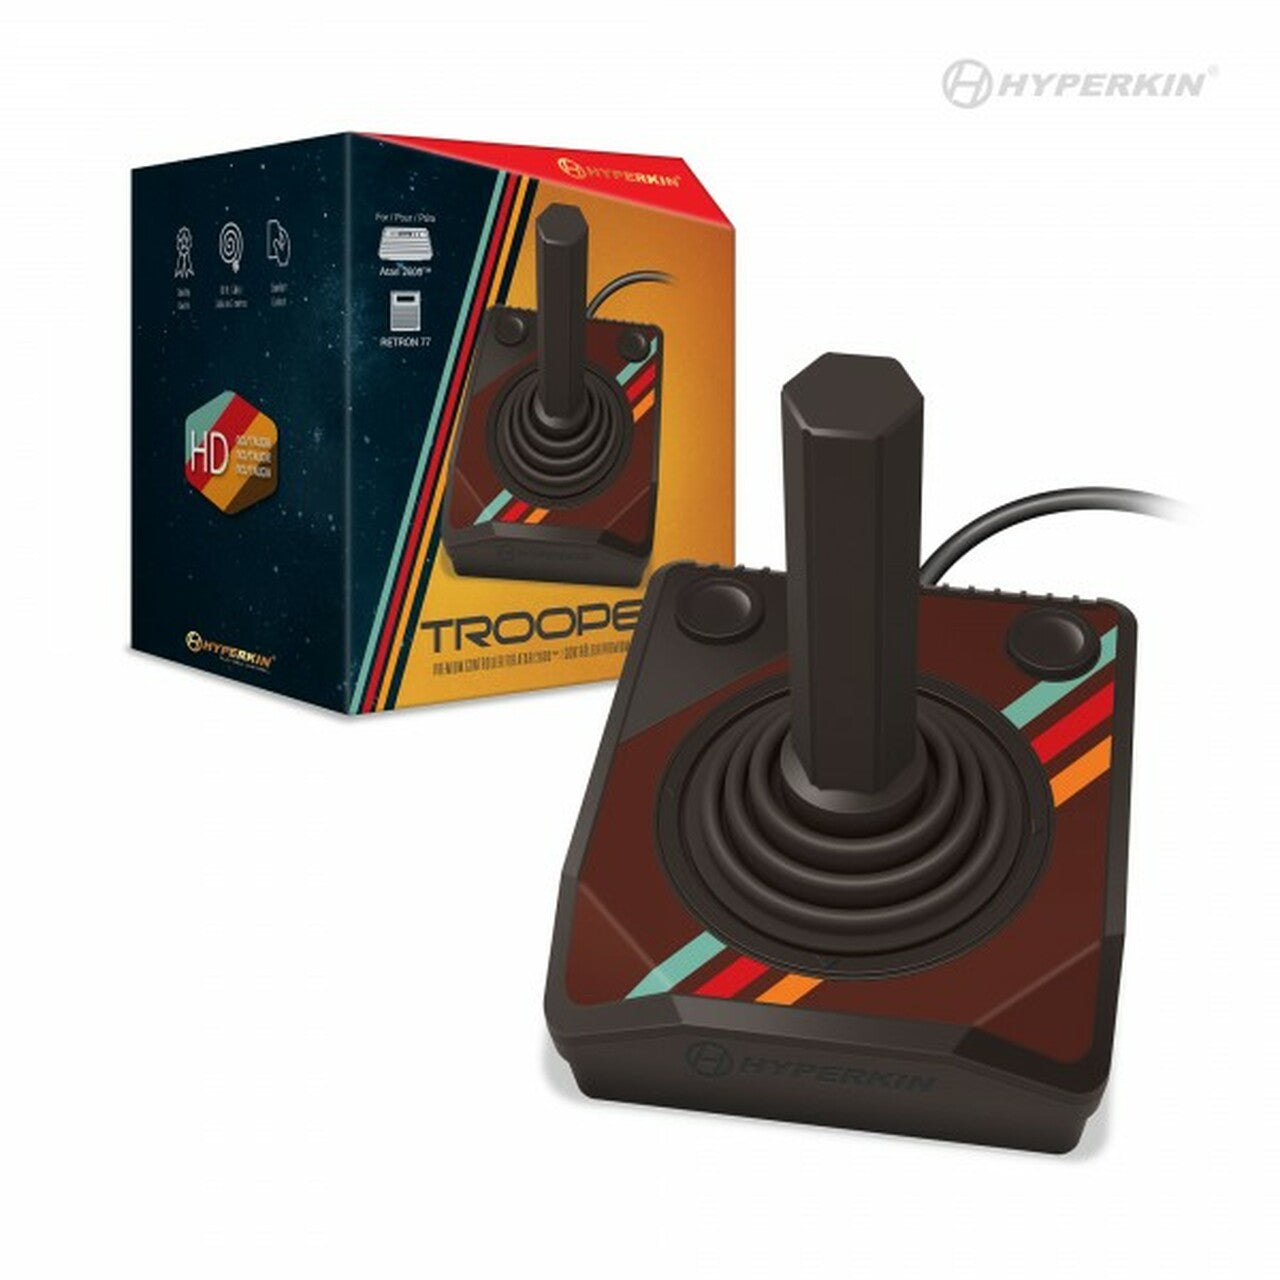 Hyperkin "Trooper" Premium Atari 2600 Controller (Hyperkin)